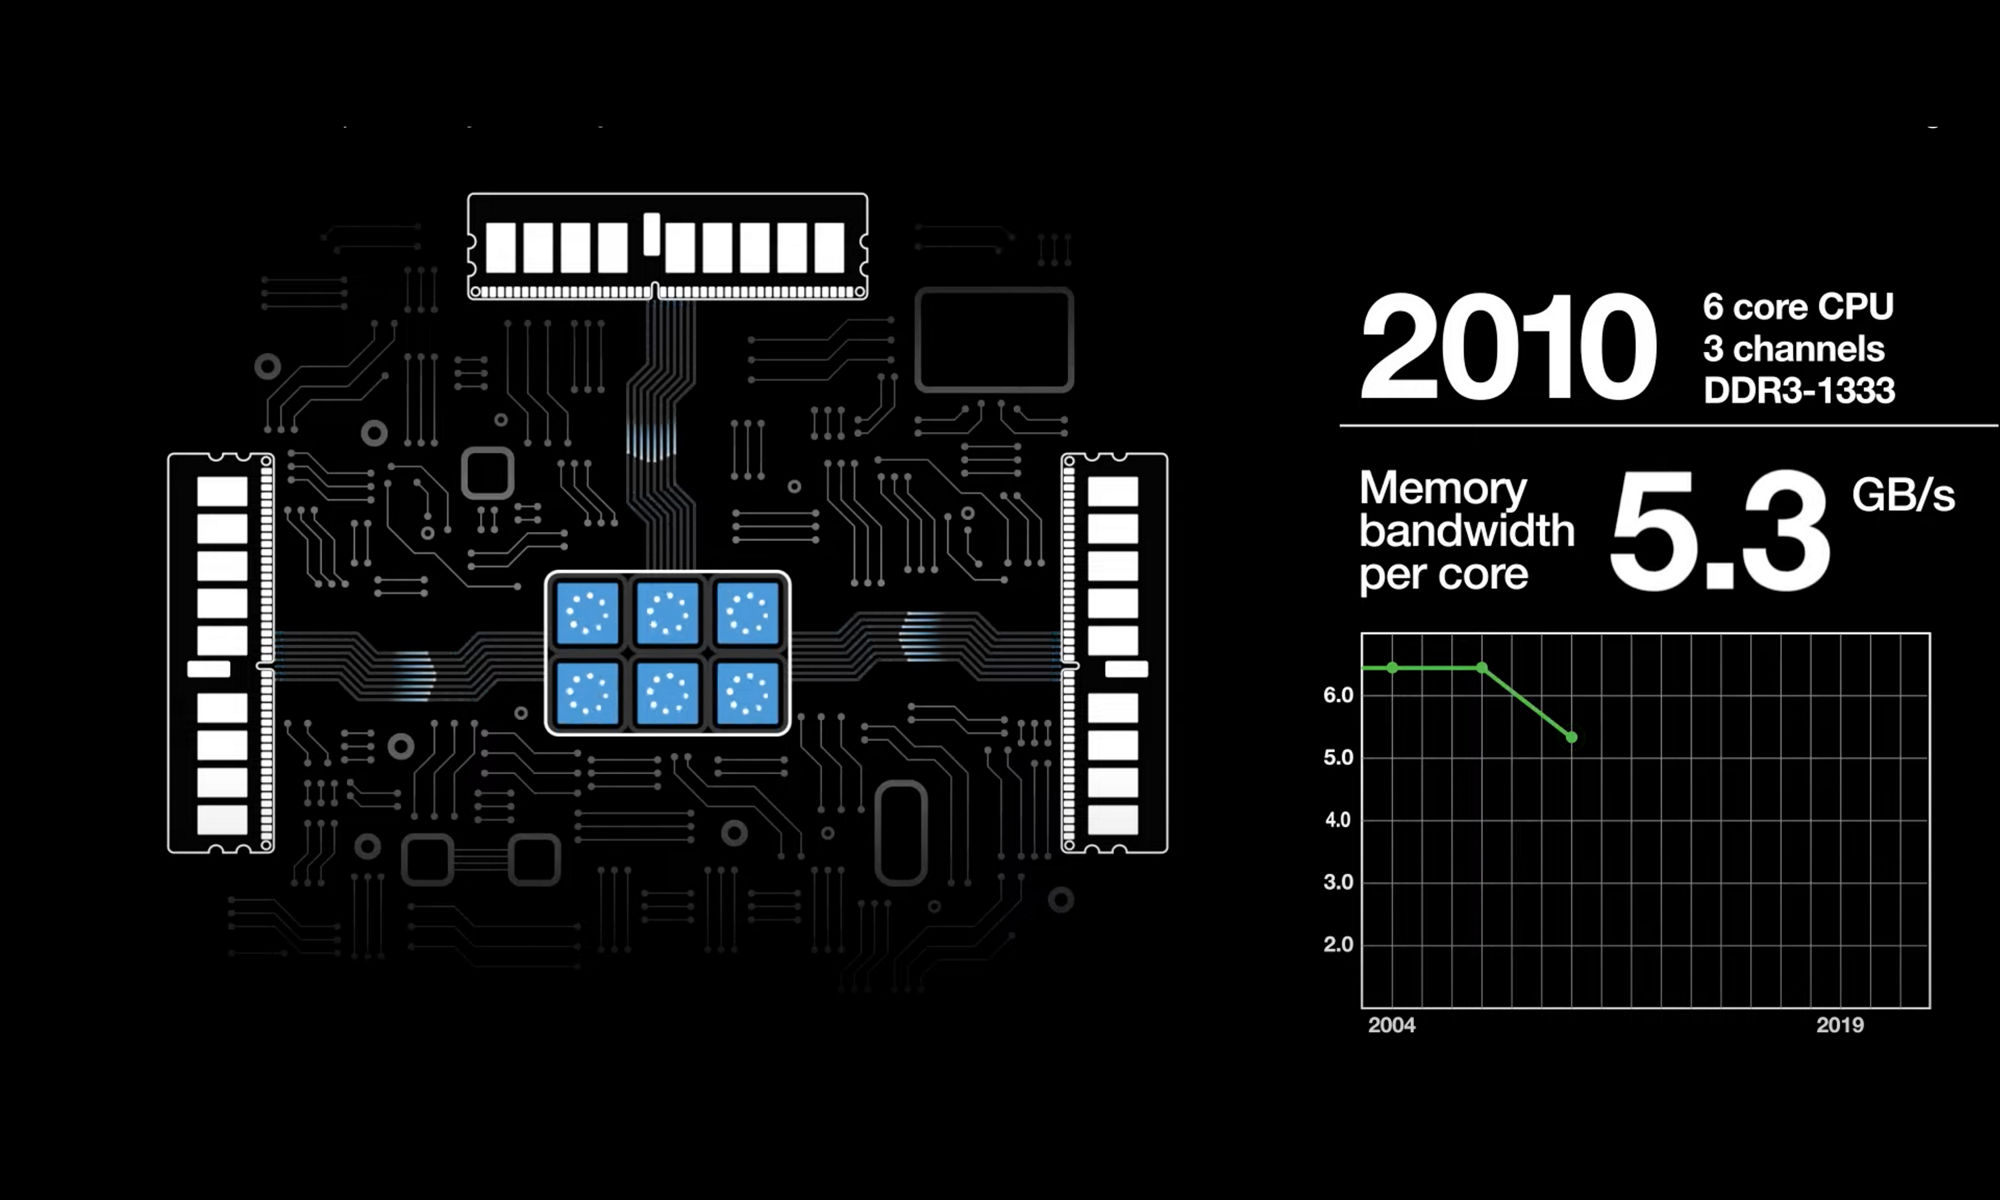 Rendering comparing 2010 DDR3 solution vs DDR5 